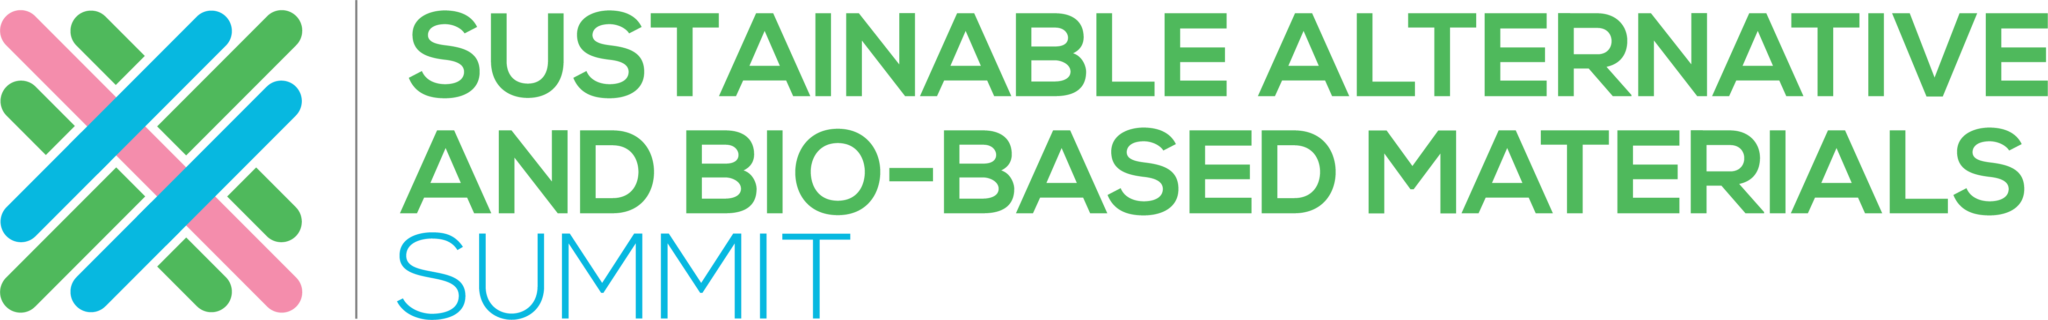 26253-Sustainable-Alternative-Bio-Based-Materials-logo-2048x320